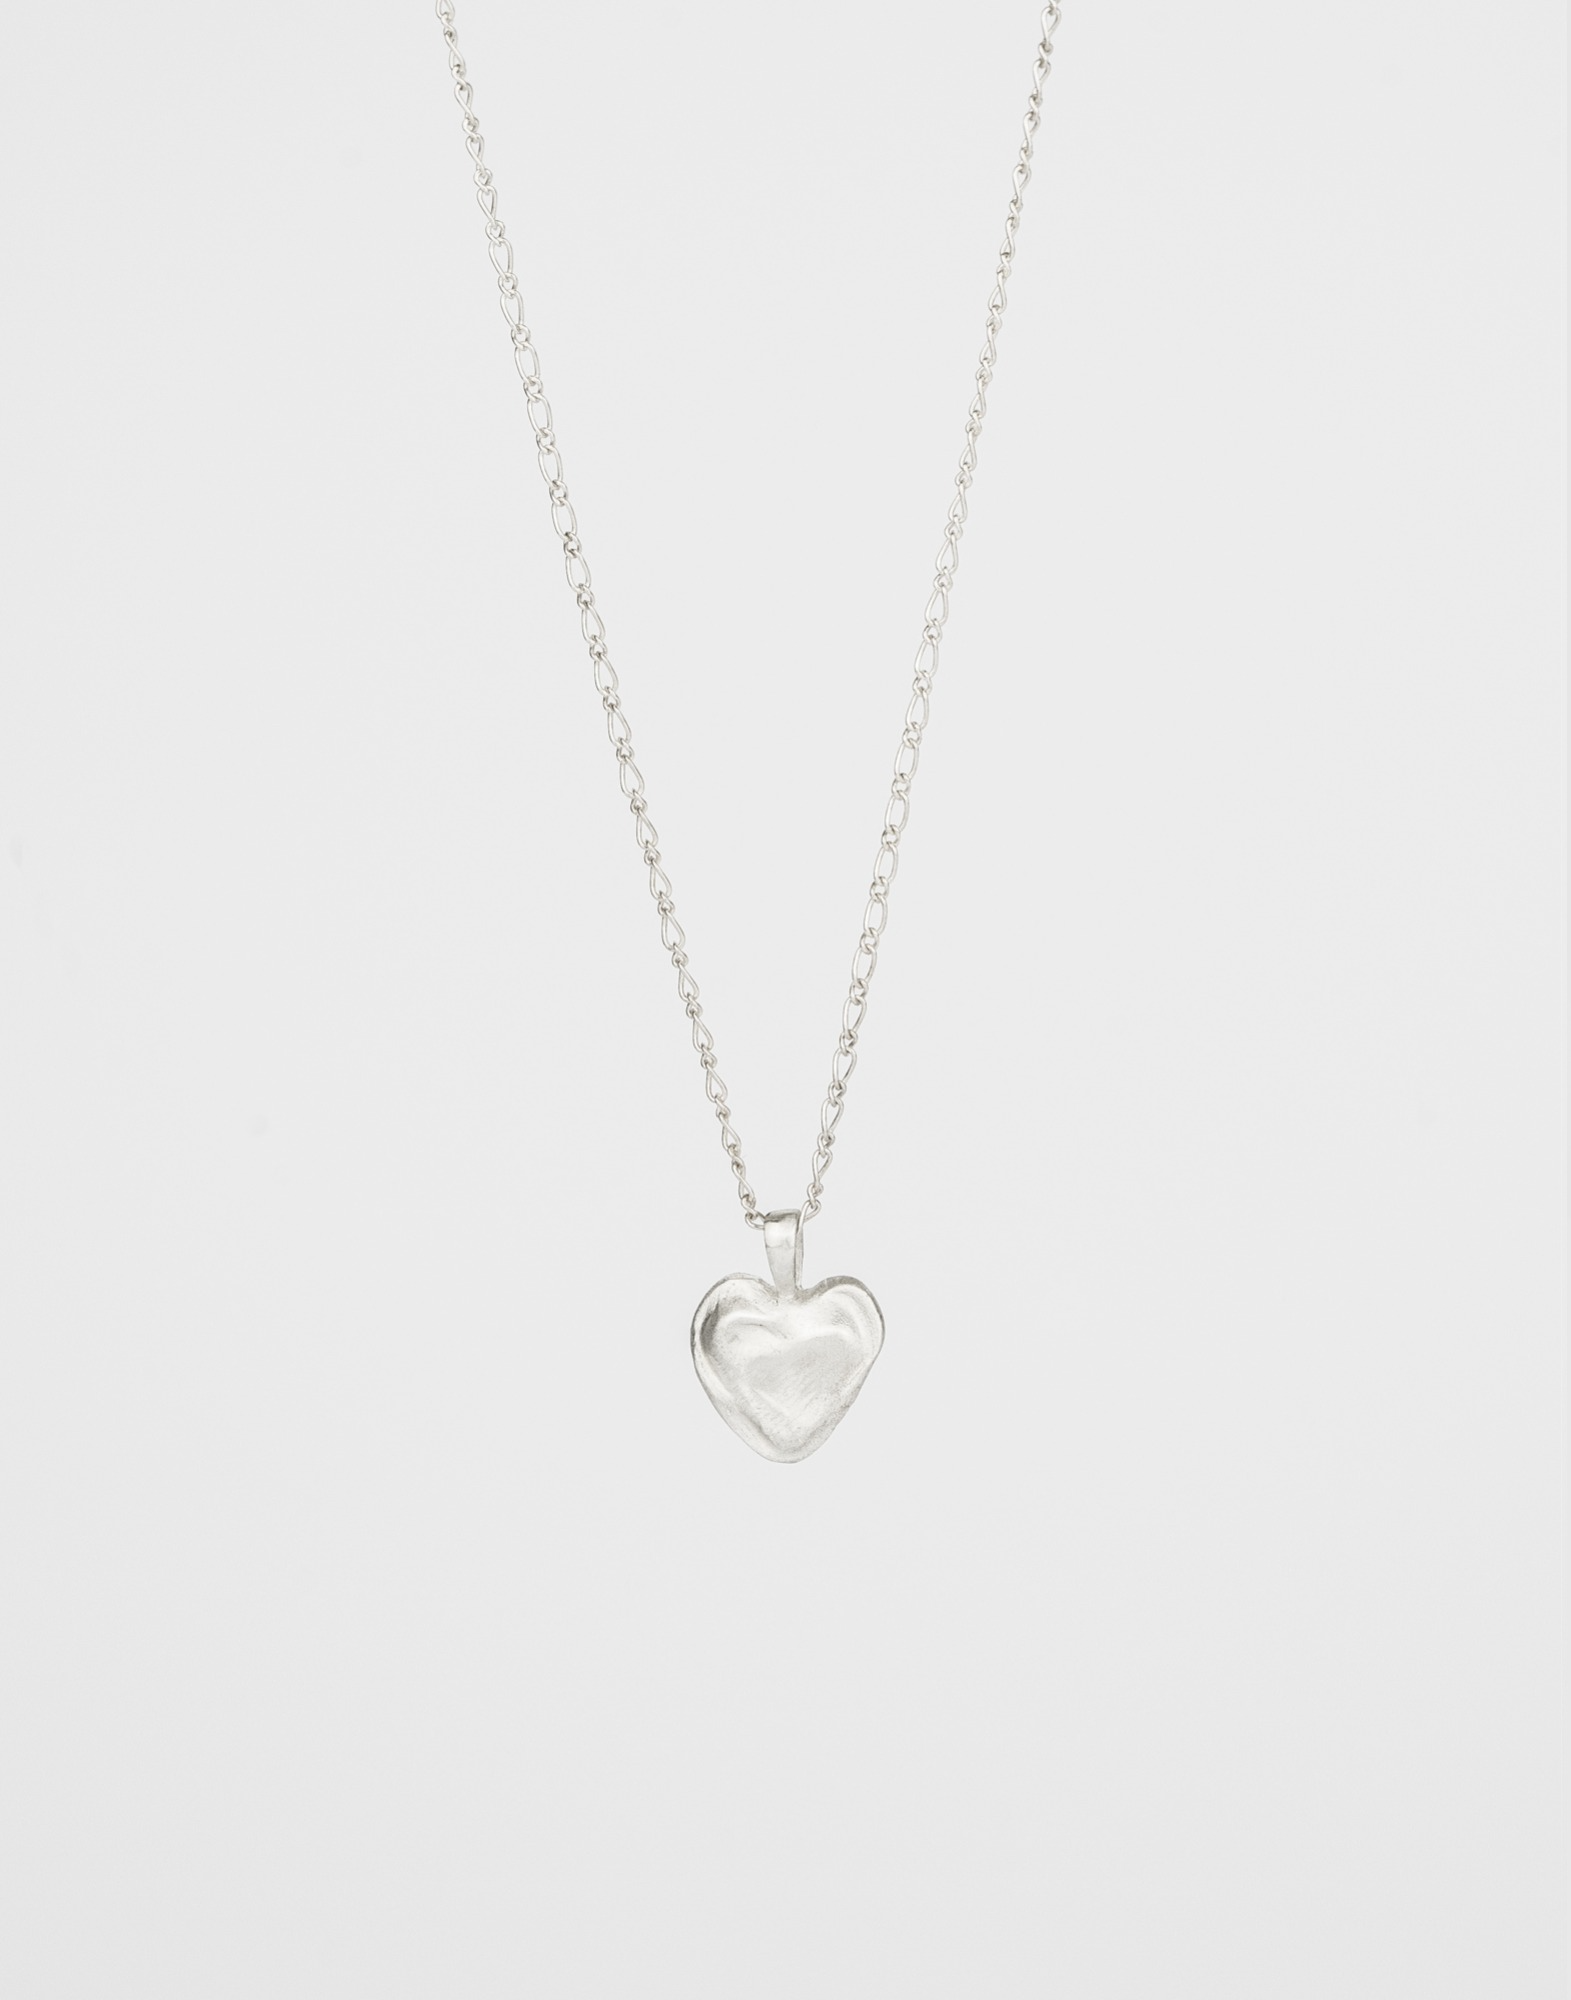 925 Silver base heart necklace